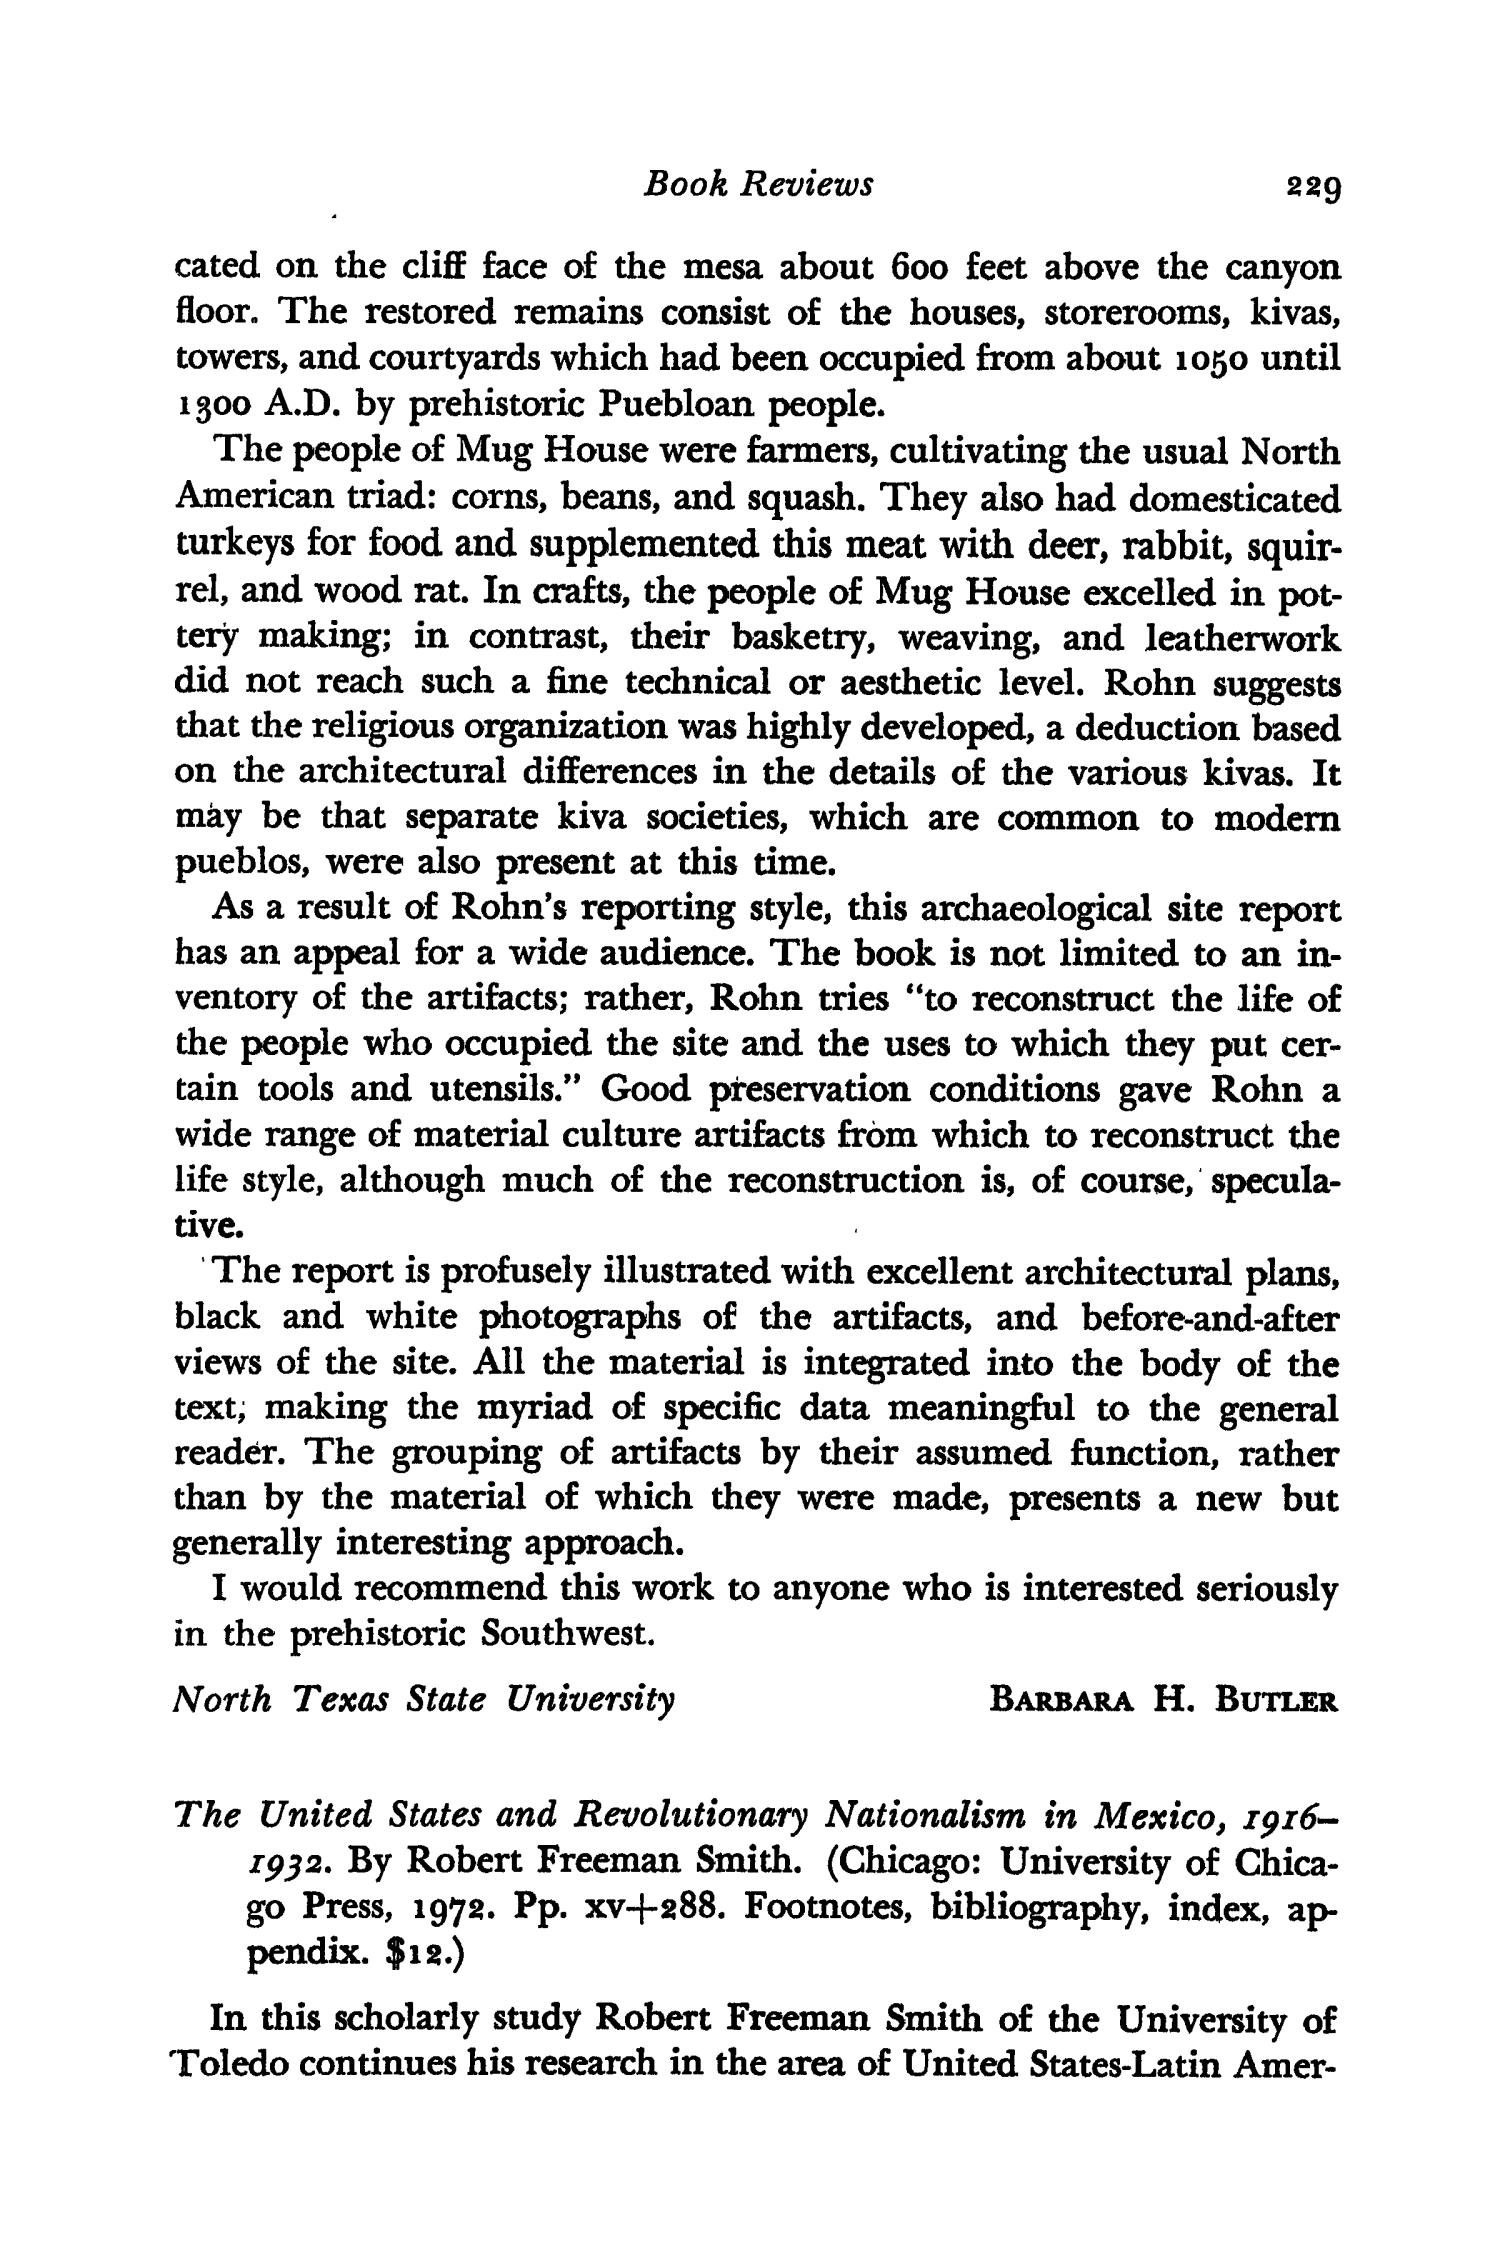 The Southwestern Historical Quarterly, Volume 76, July 1972 - April, 1973
                                                
                                                    229
                                                